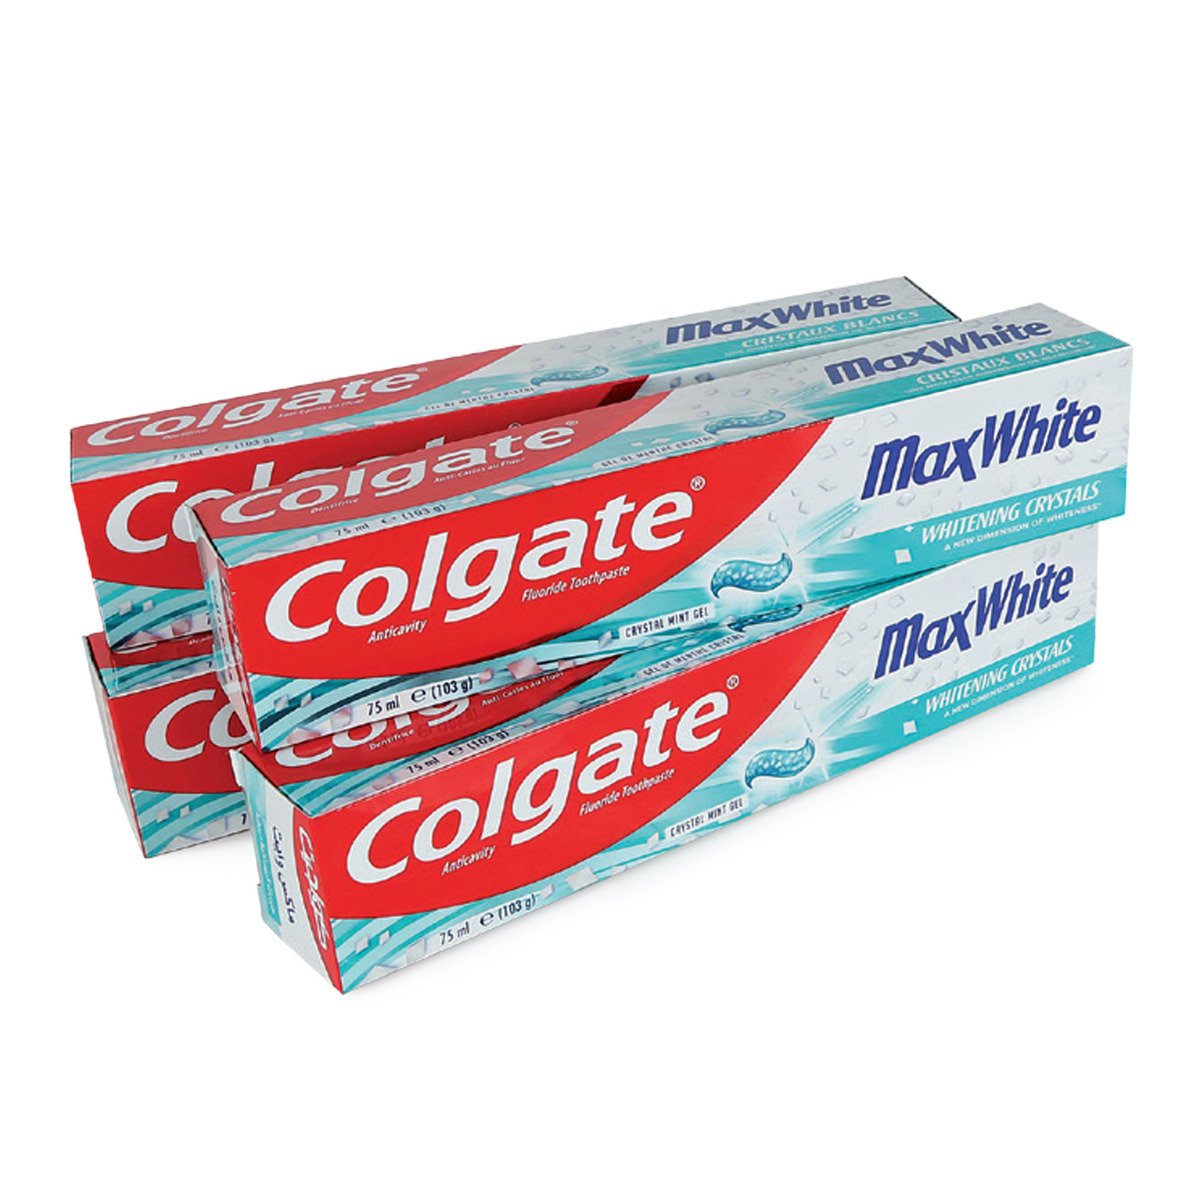 Colgate Max White Whitening Crystal Toothpaste 4 x 75 ml